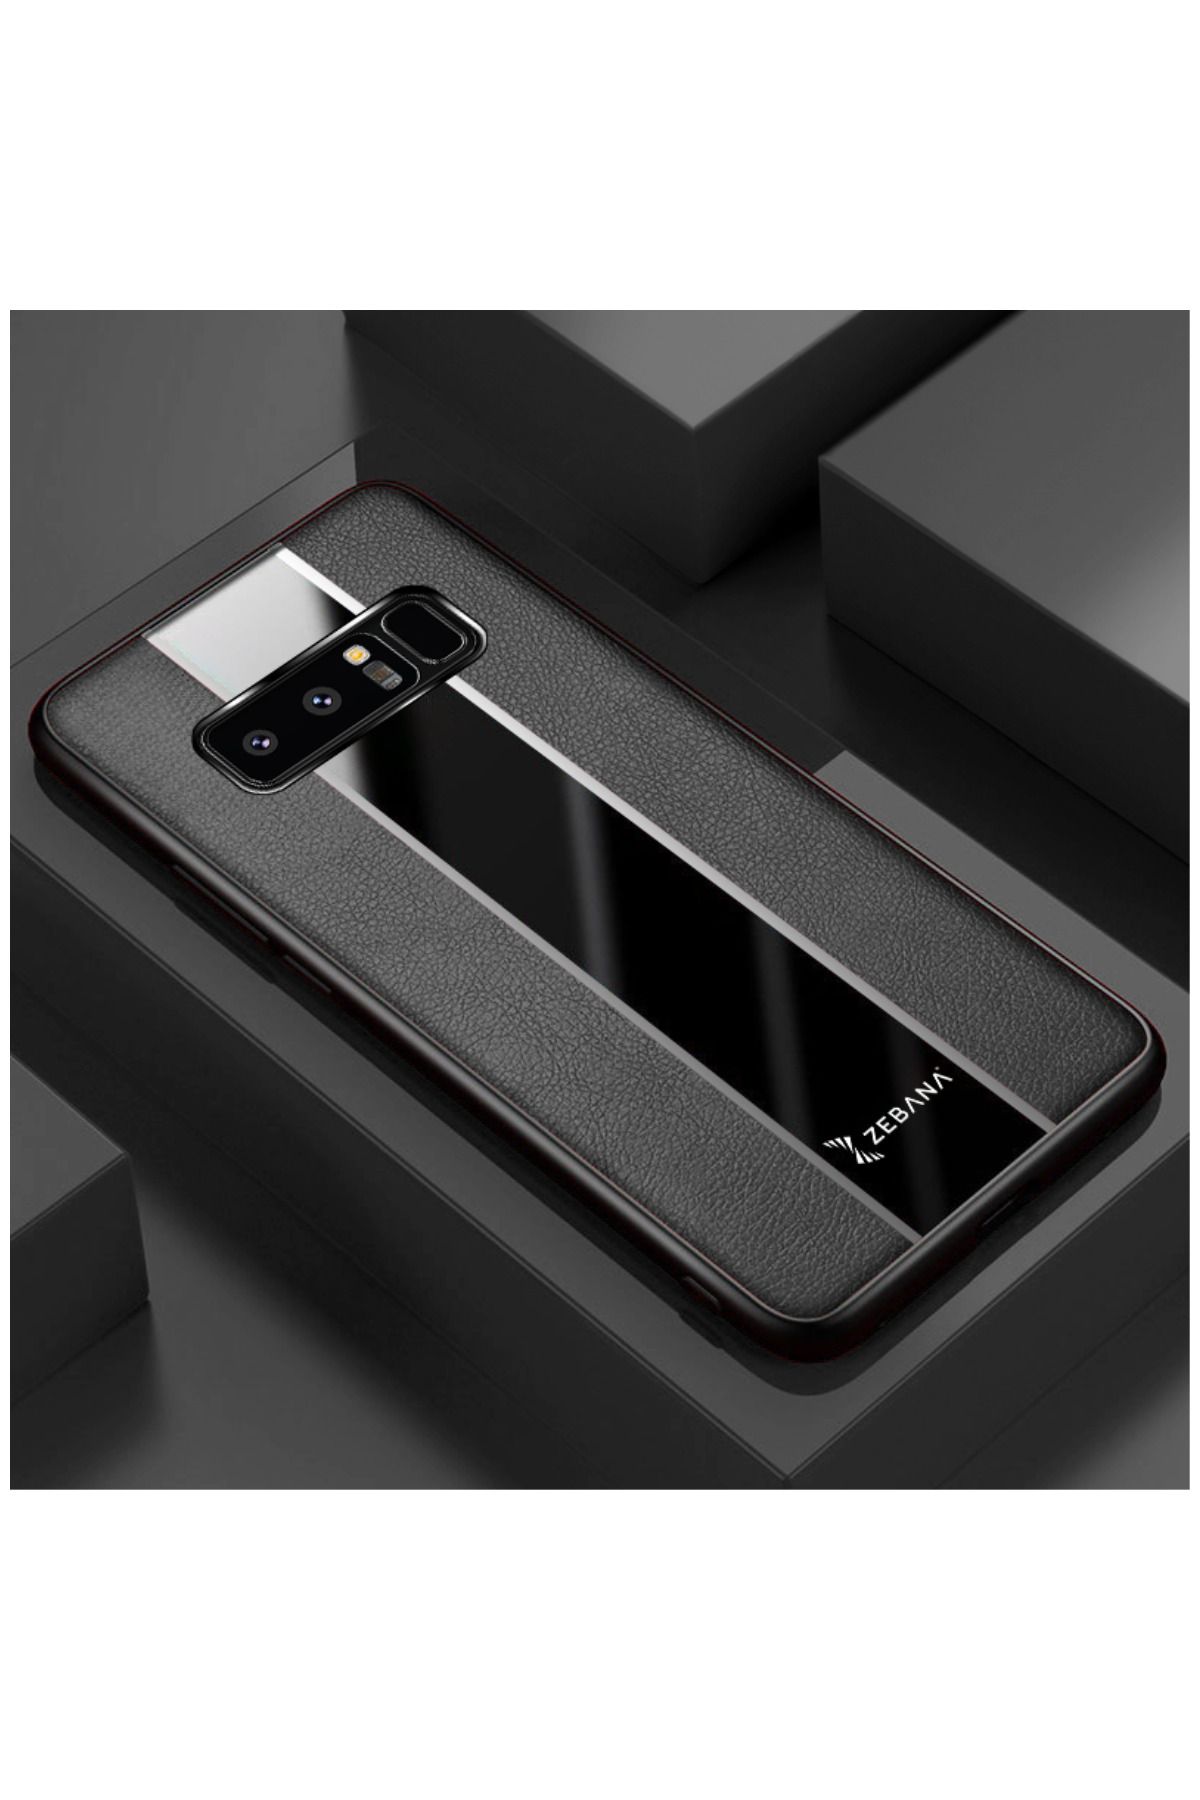 Zebana Samsung Galaxy Note 8 Uyumlu Kılıf Premium Deri Kılıf Siyah